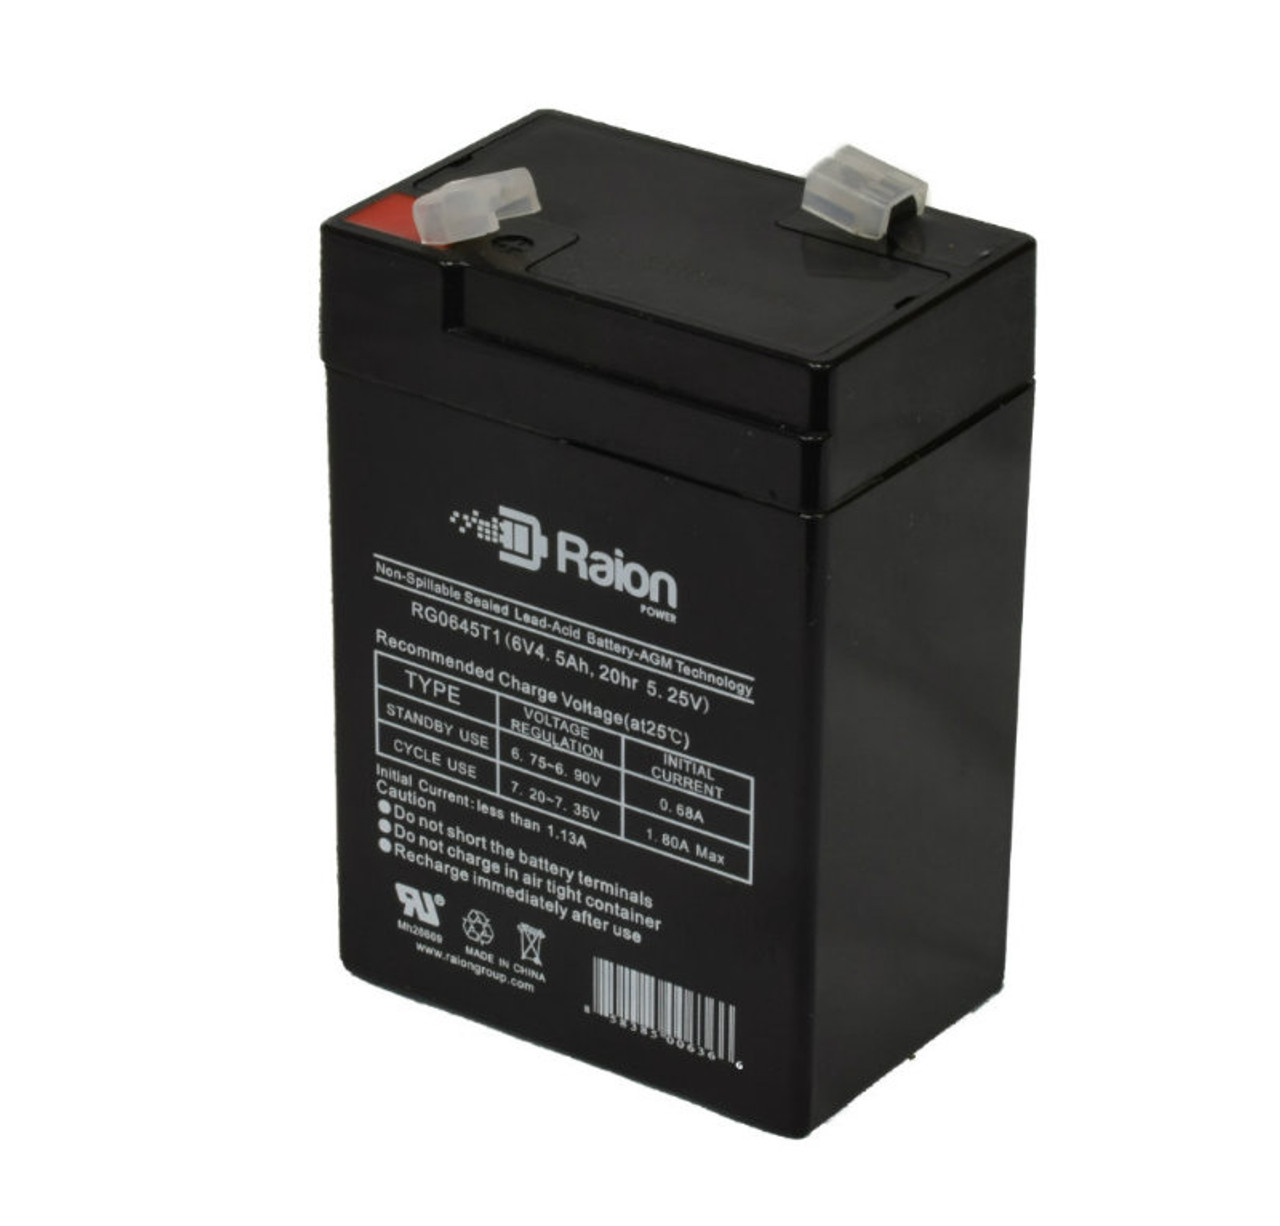 Raion Power RG0645T1 6V 4.5Ah Replacement Battery Cartridge for Kaiying KS4-6AZ